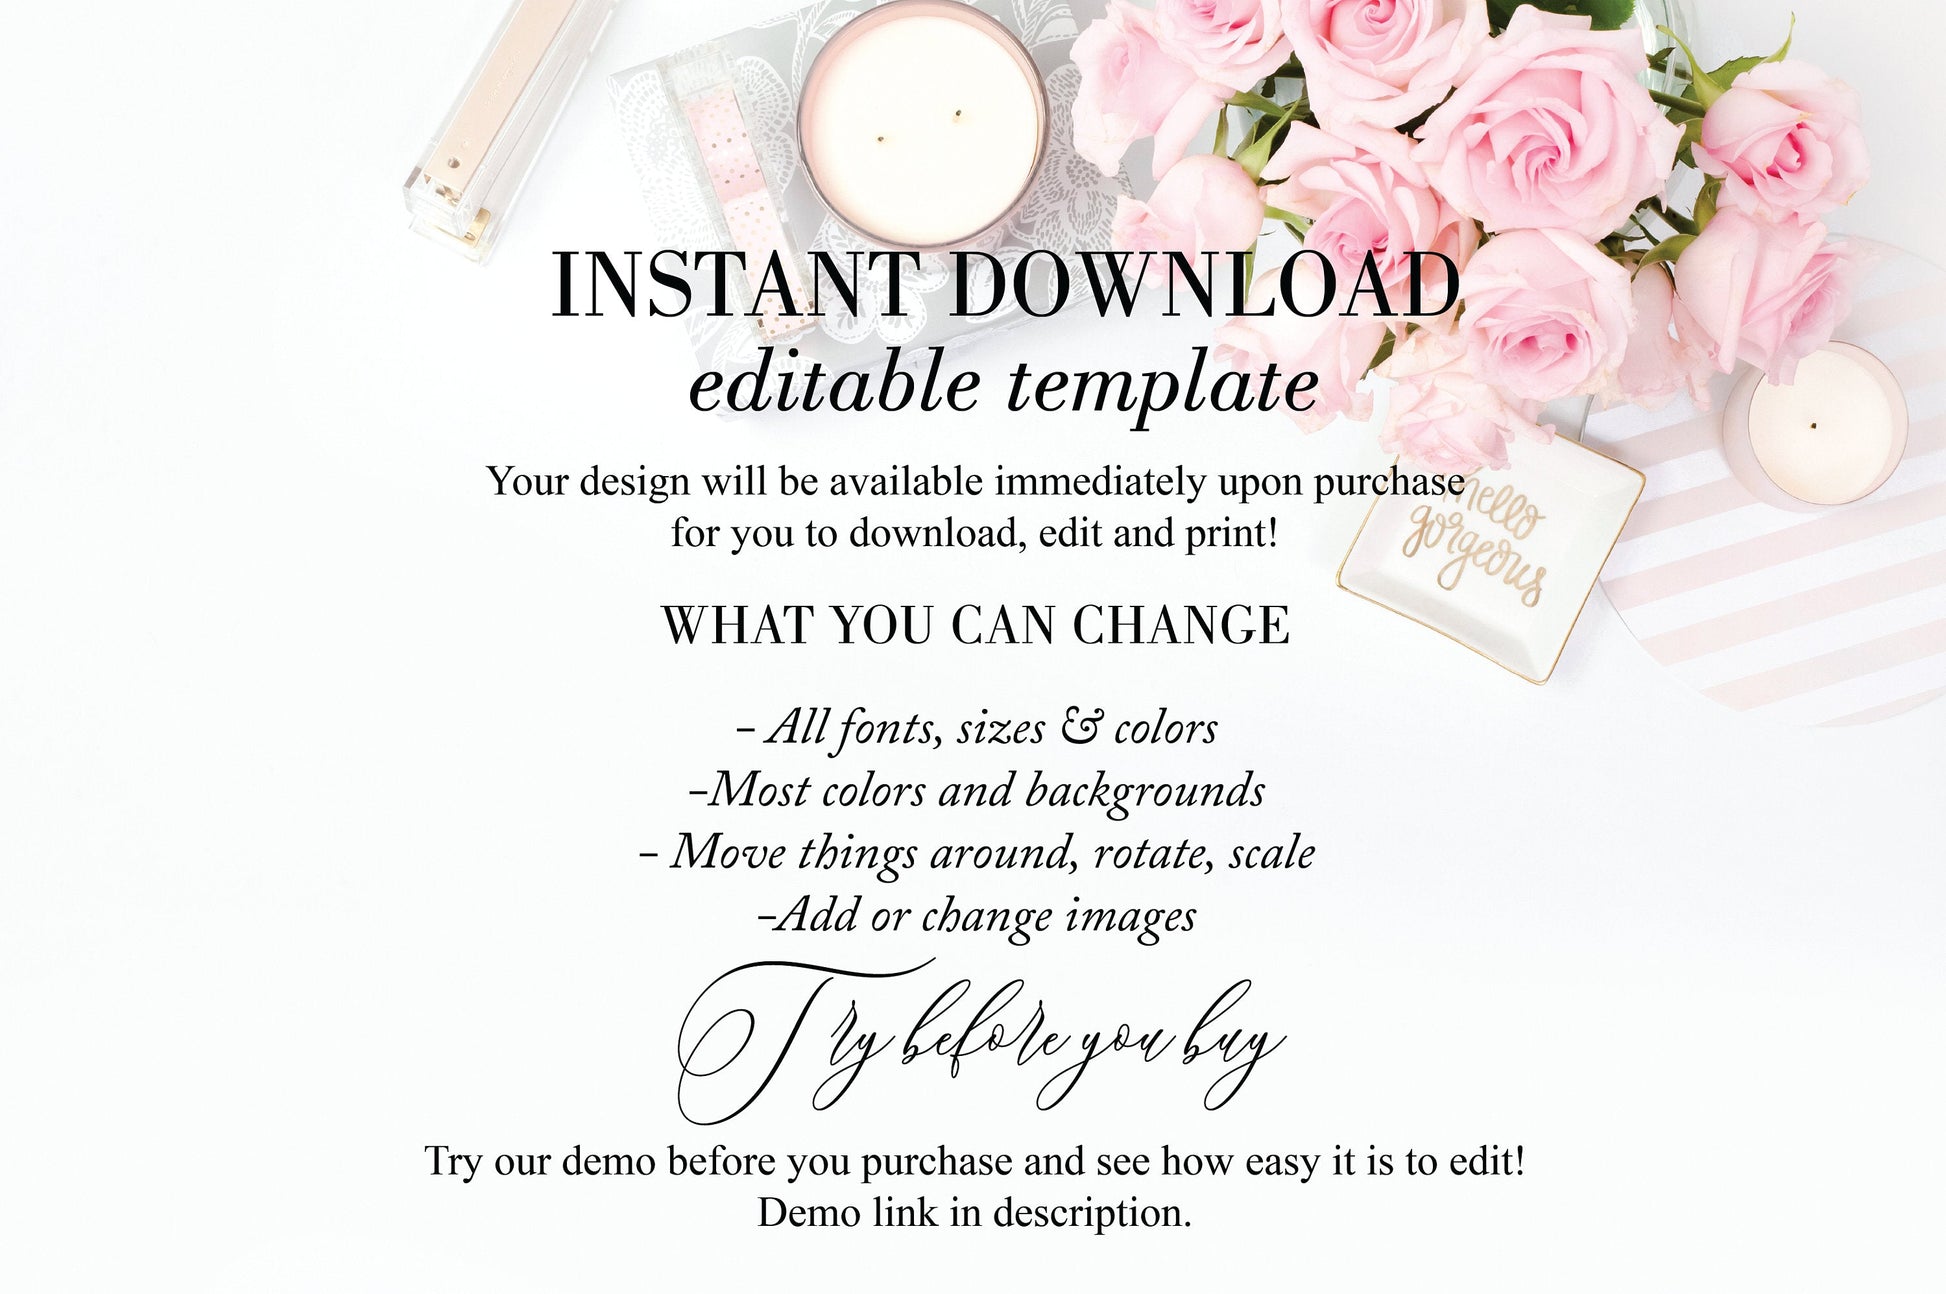 Printable Wedding Itinerary Template Card Timeline Welcome, 100% editable Templett - Fleur MENU|PROGRAMS|TIMELINE SAVVY PAPER CO